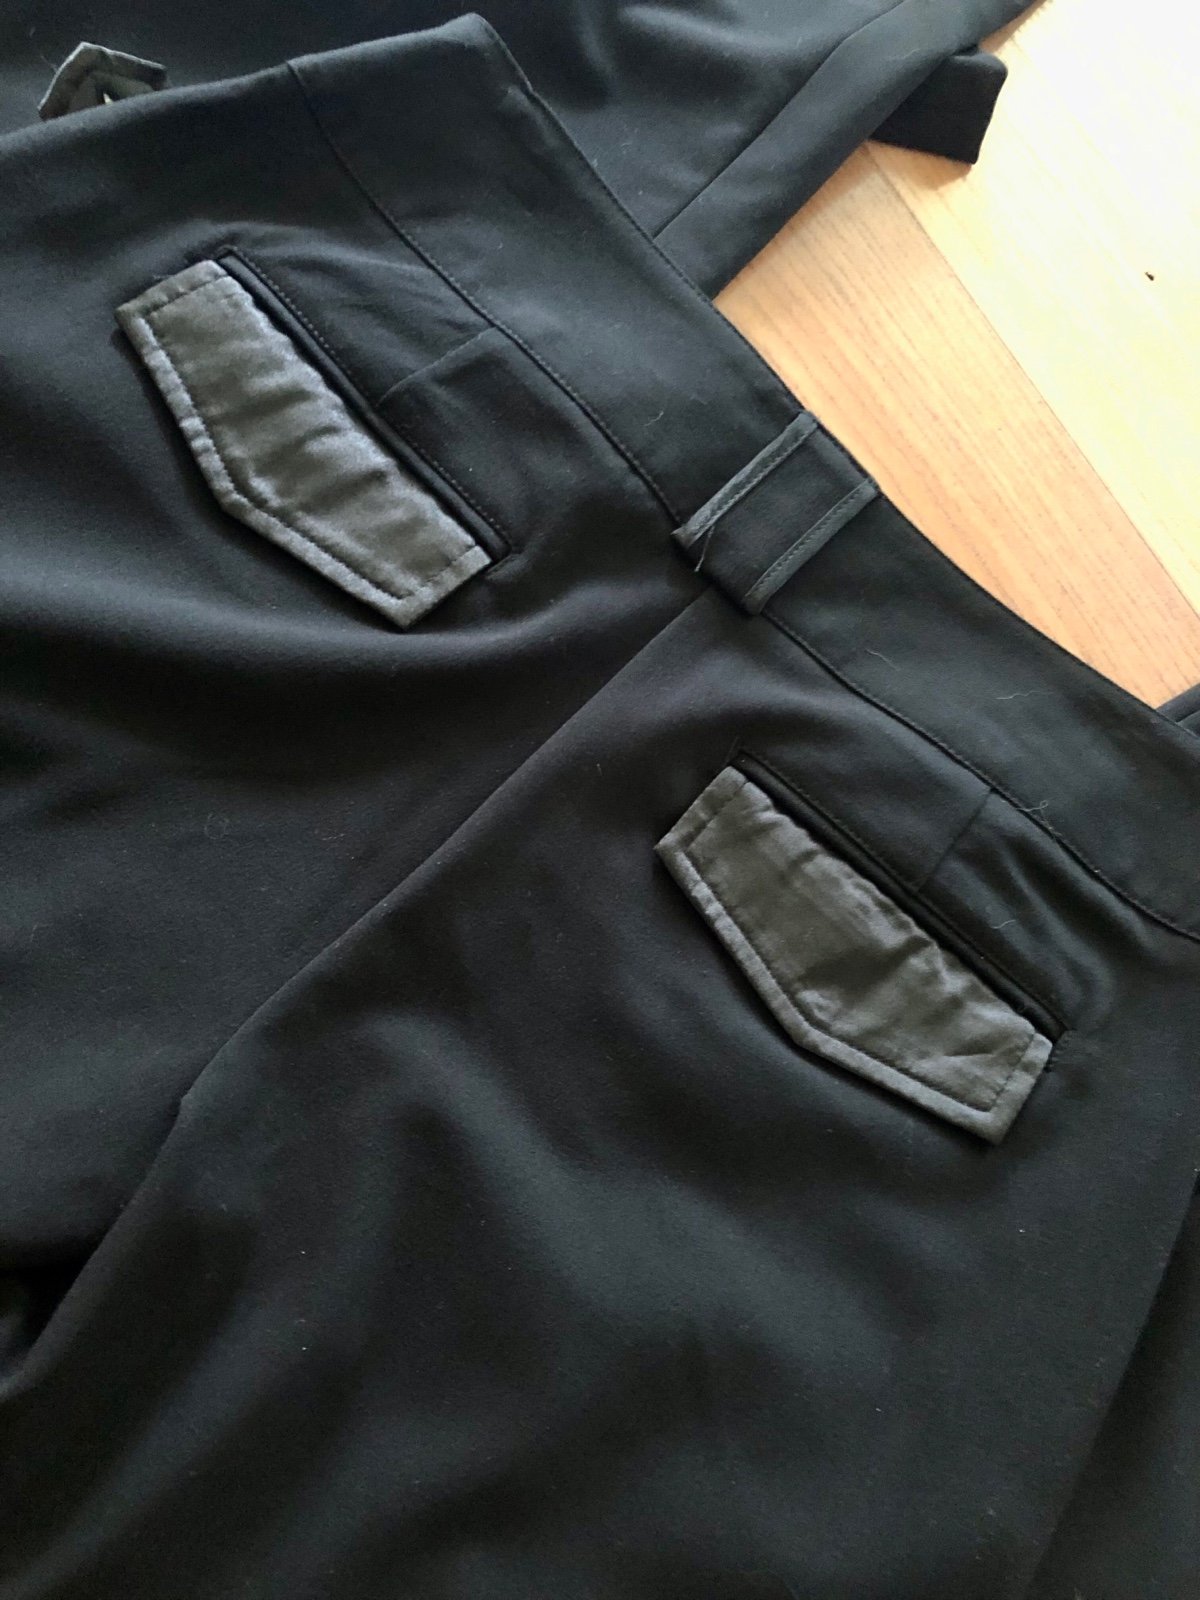 Simple NWT Vintage INC Pants MEGSzqZC3 Low Price